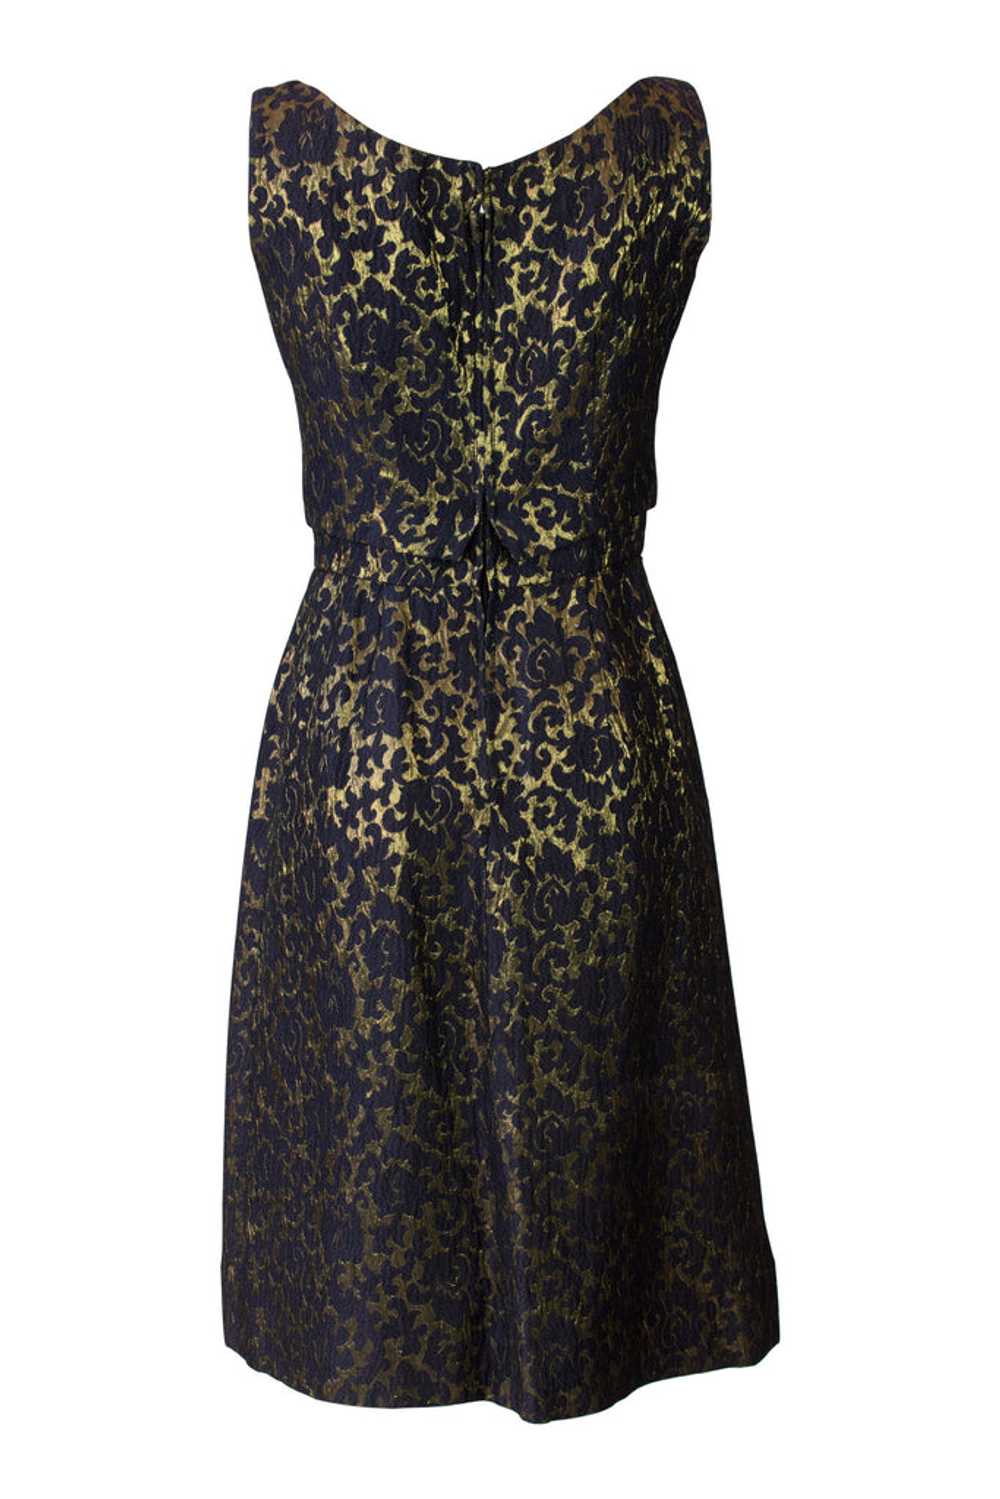 1960's Brocade Dress - image 2